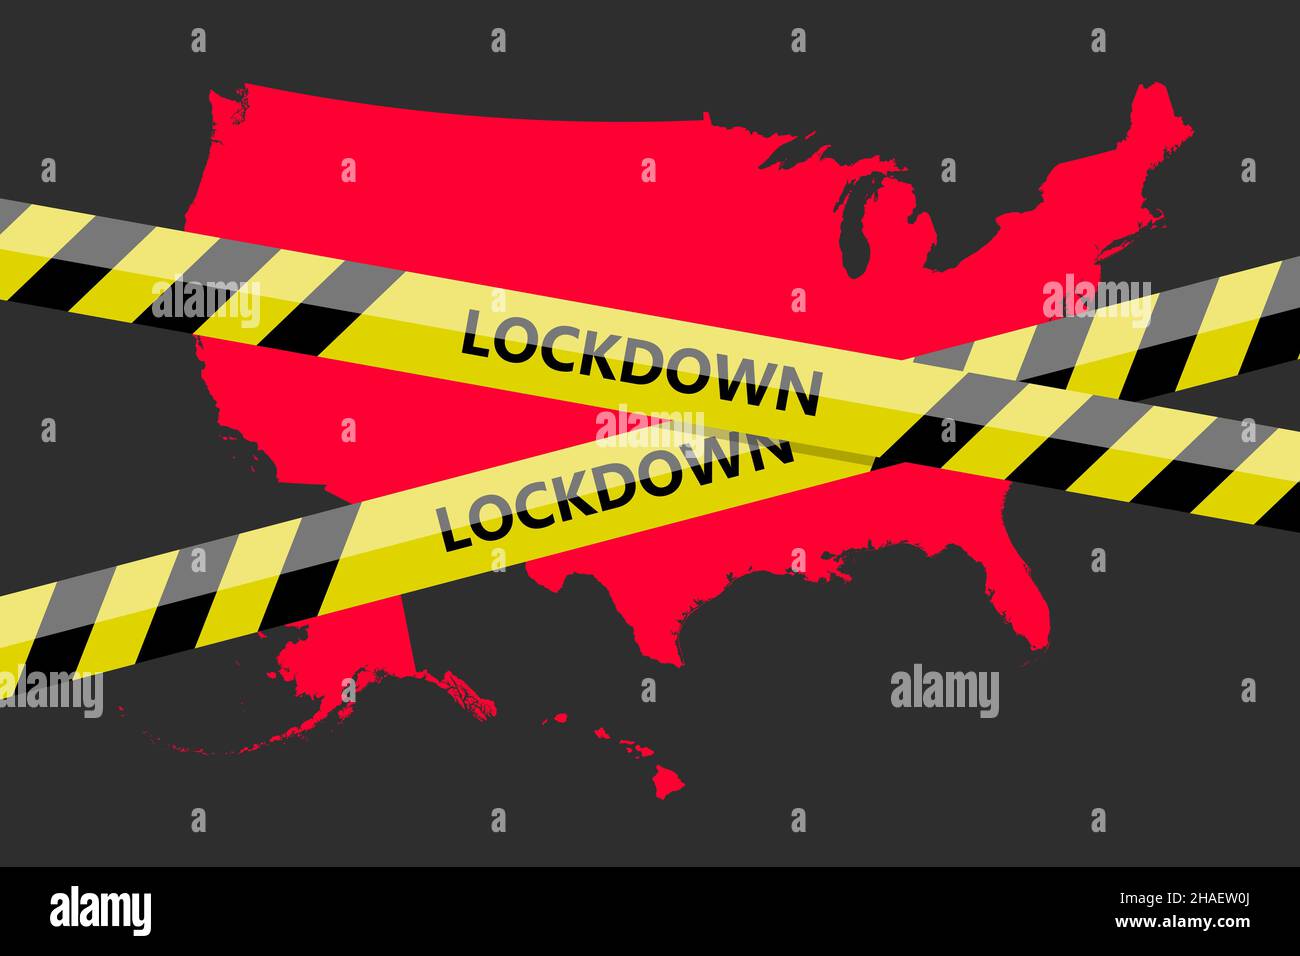 lockdown tape over USA American state silhouette. Coronavirus threat. Concept image. Vector illustration Stock Photo